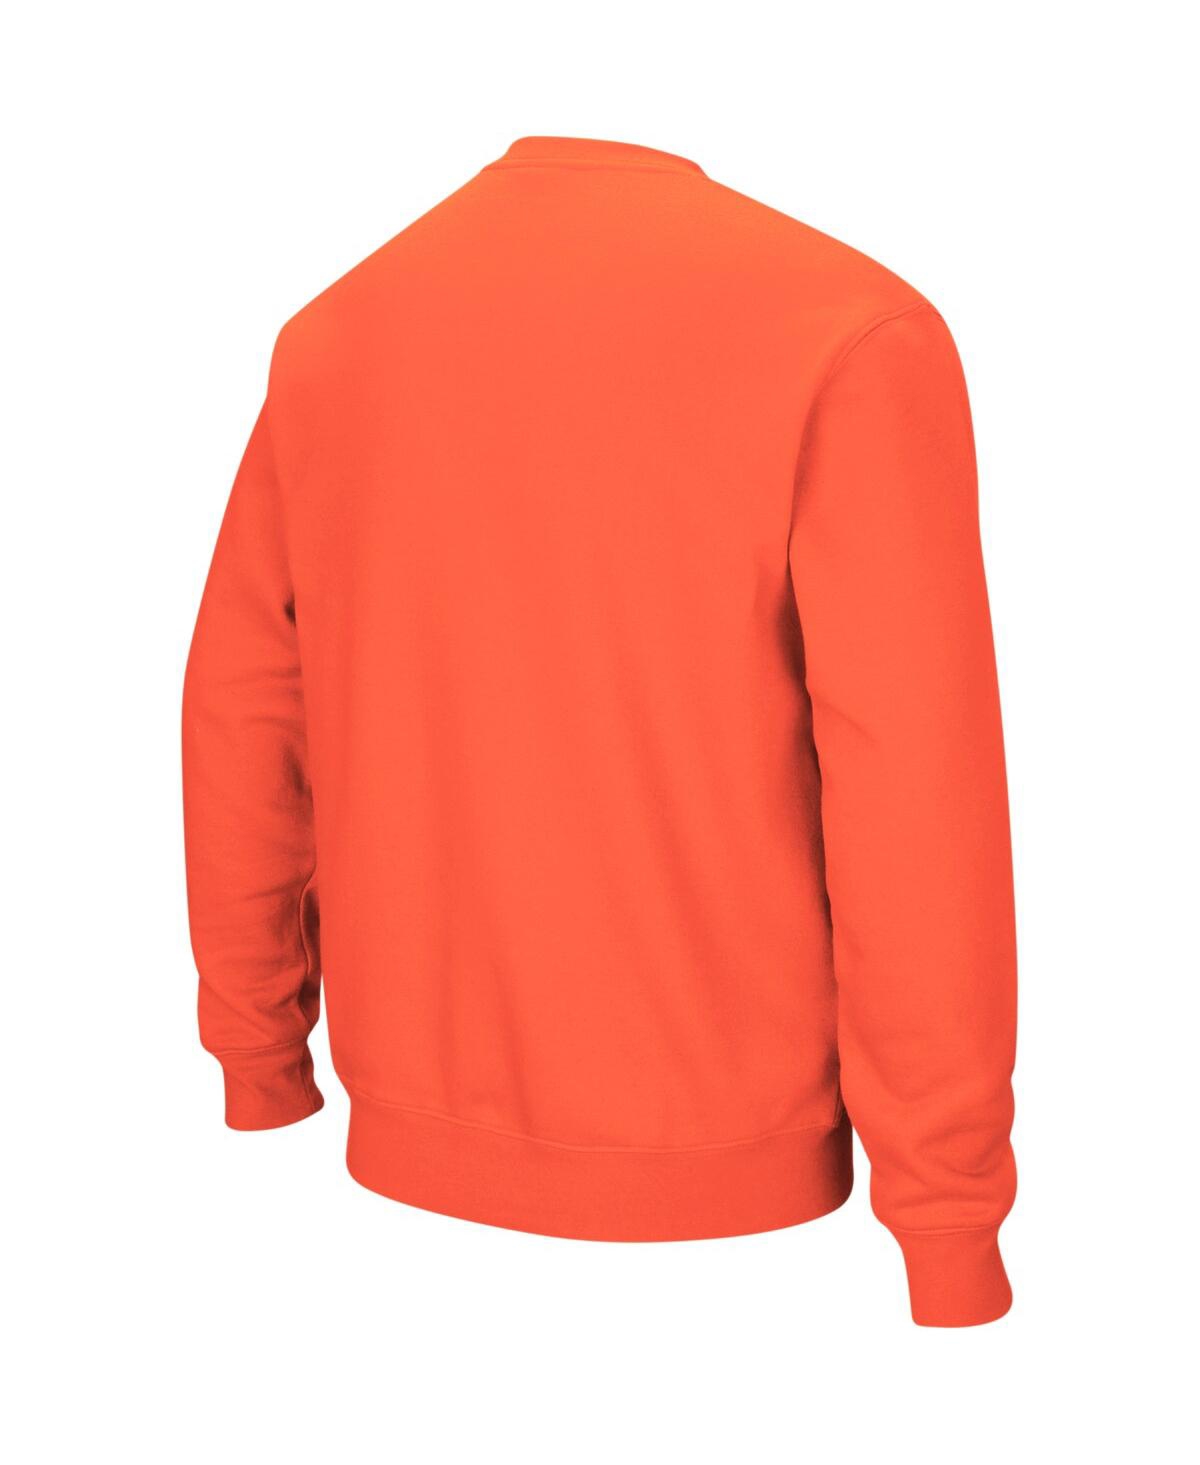 Shop Colosseum Men's  Orange Virginia Tech Hokies Arch And Logo Crew Neck Sweatshirt